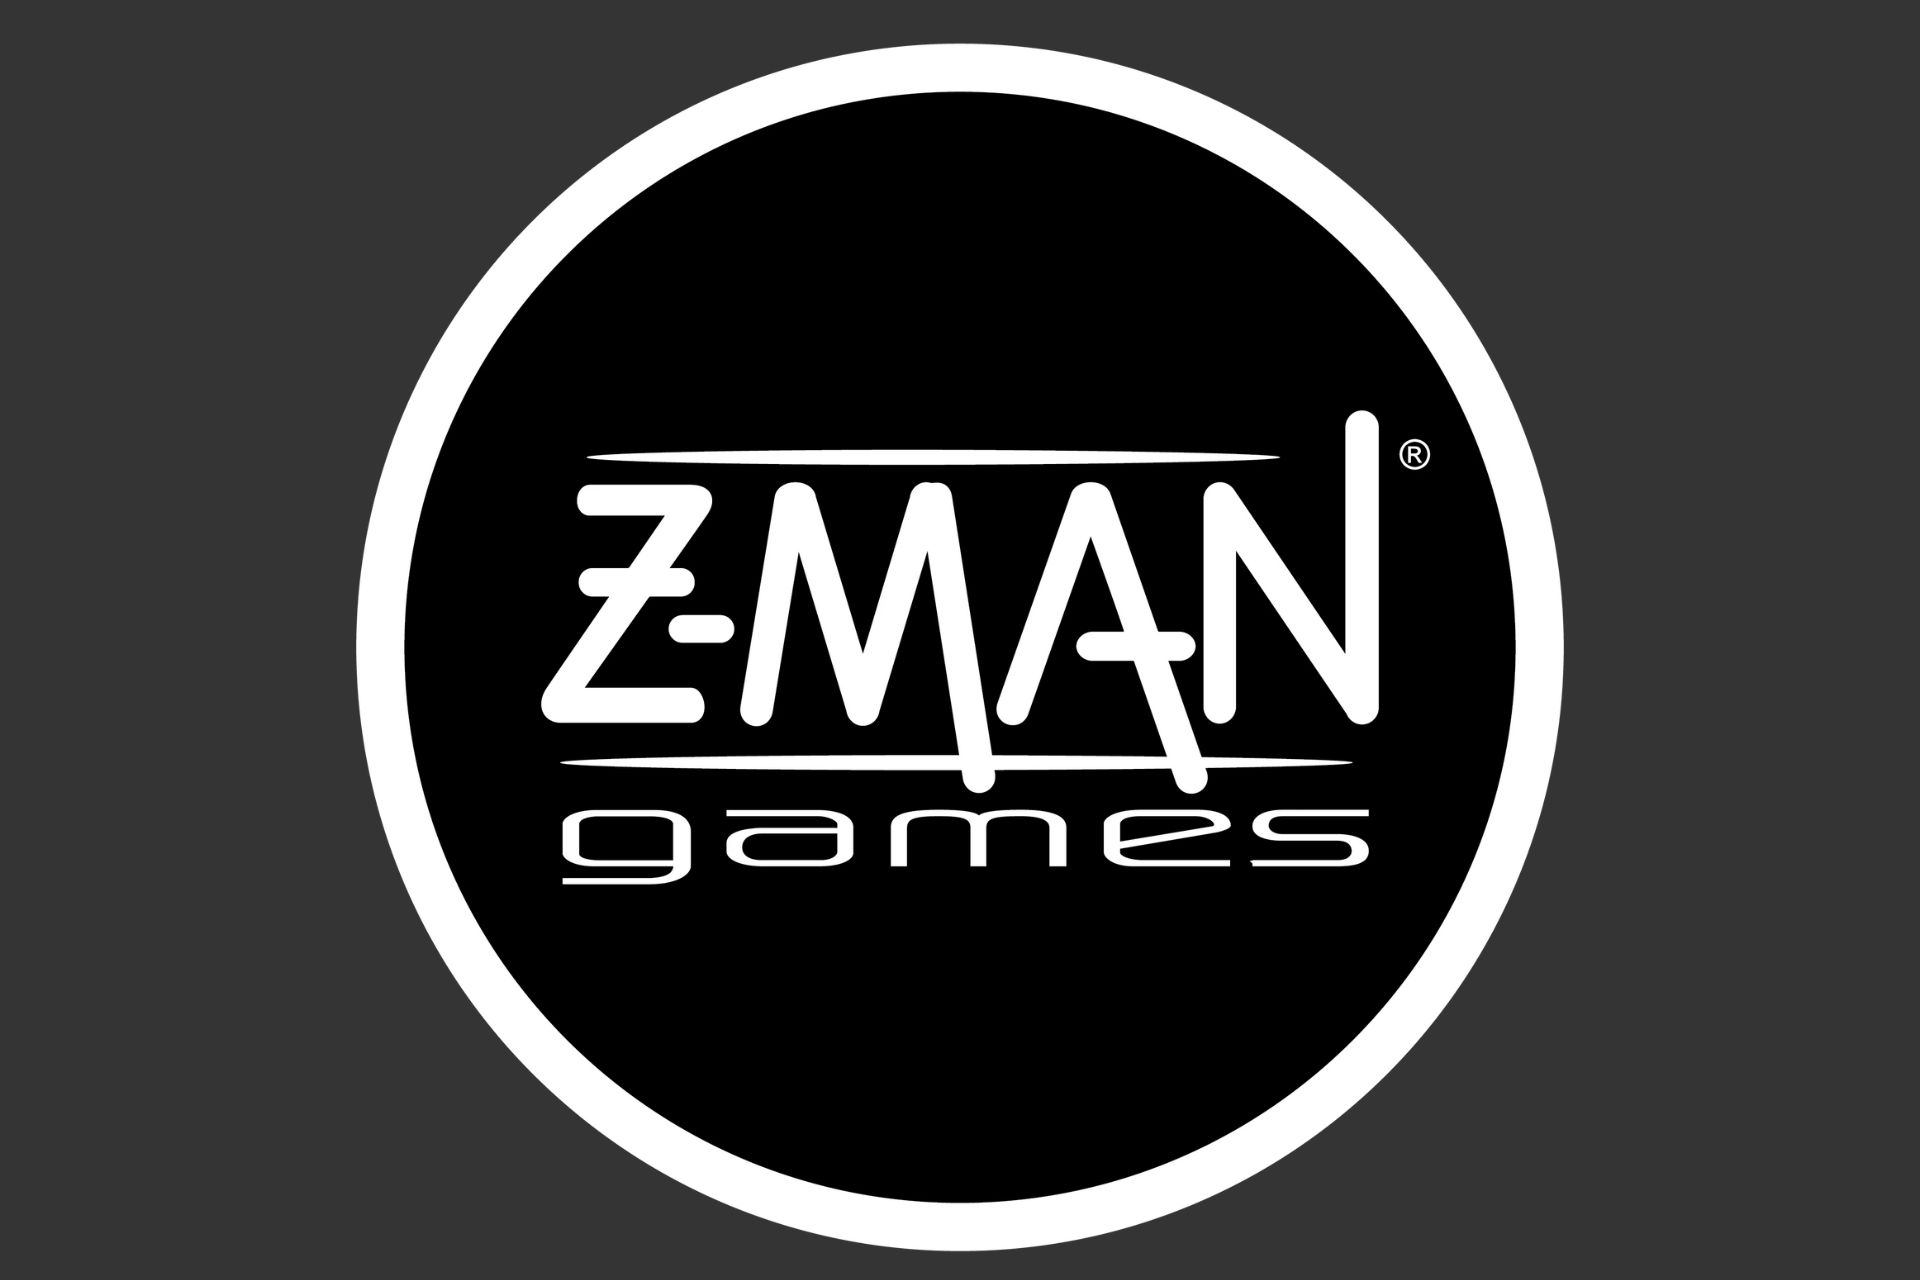 Zman games